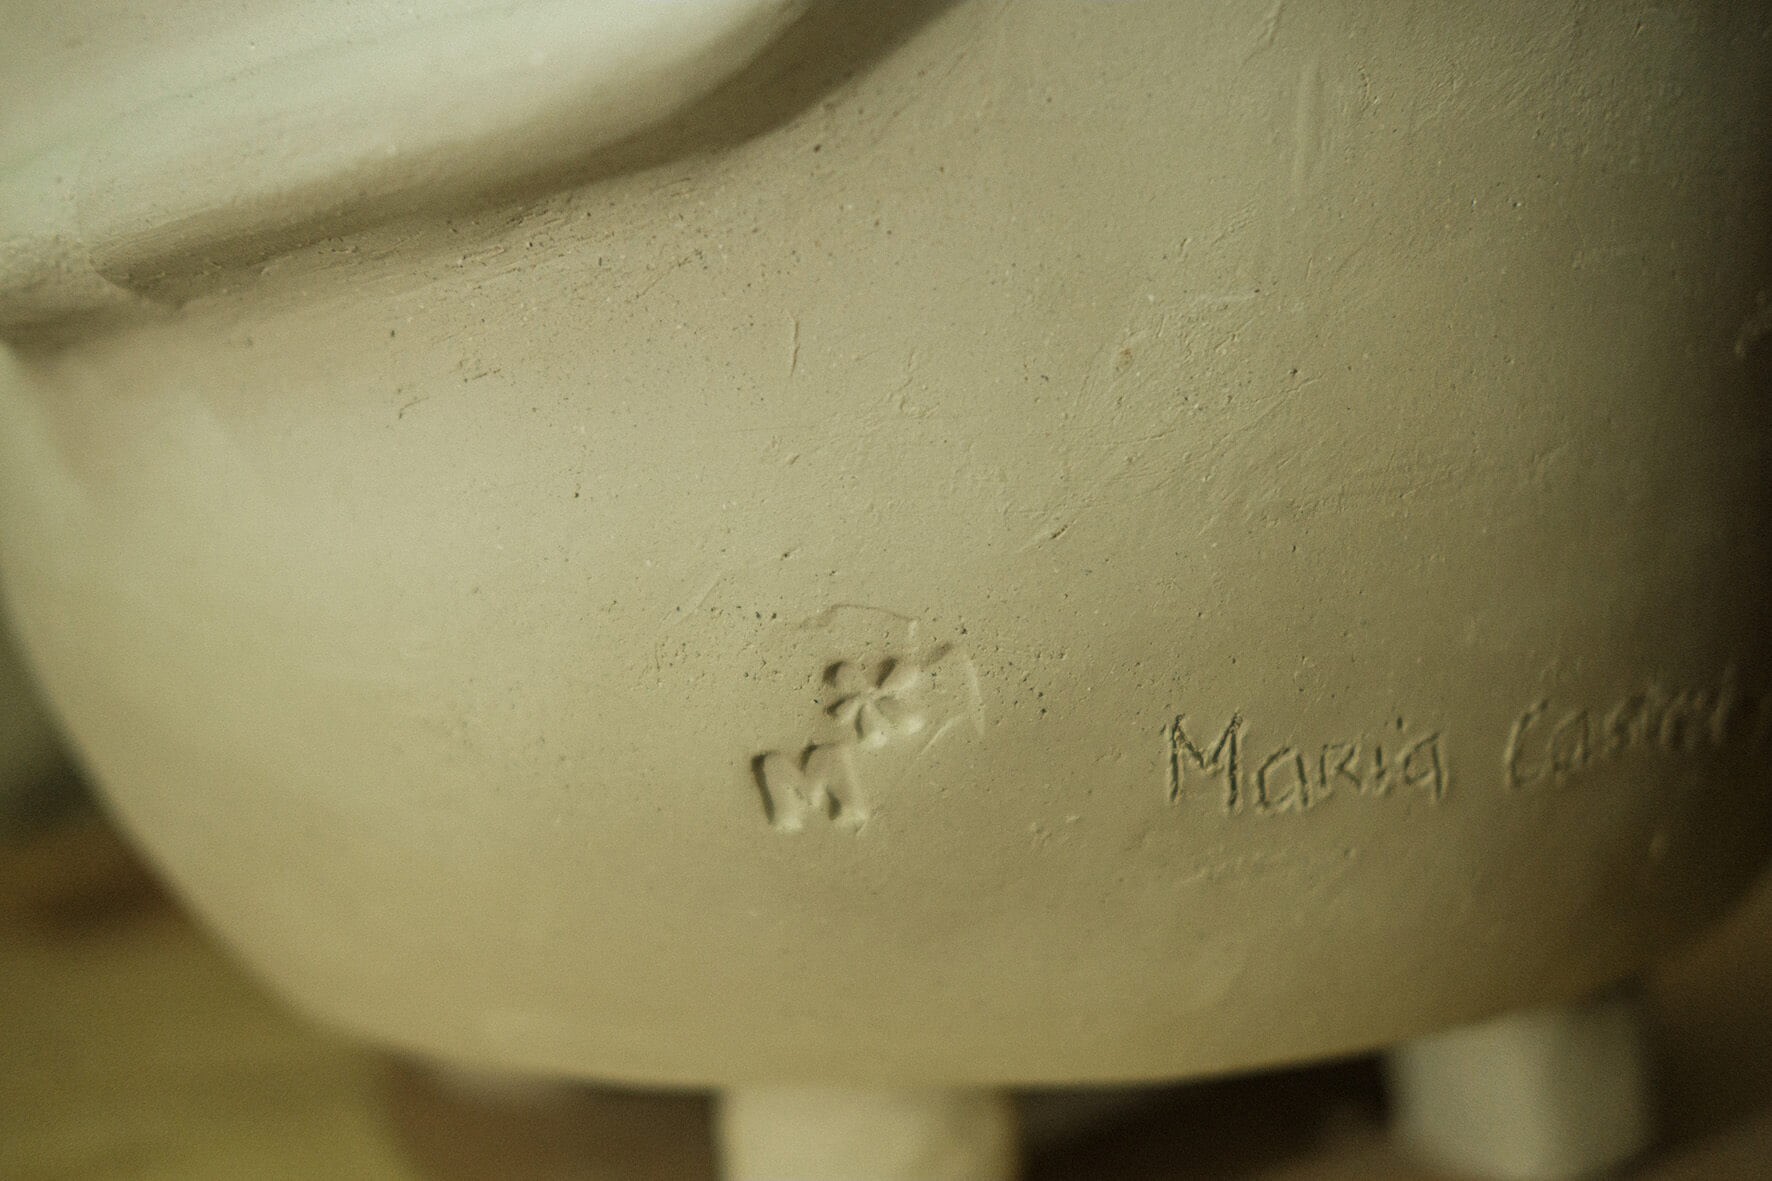 Pormenor de carimbo e nome da ceramista numa peça de cerâmica.